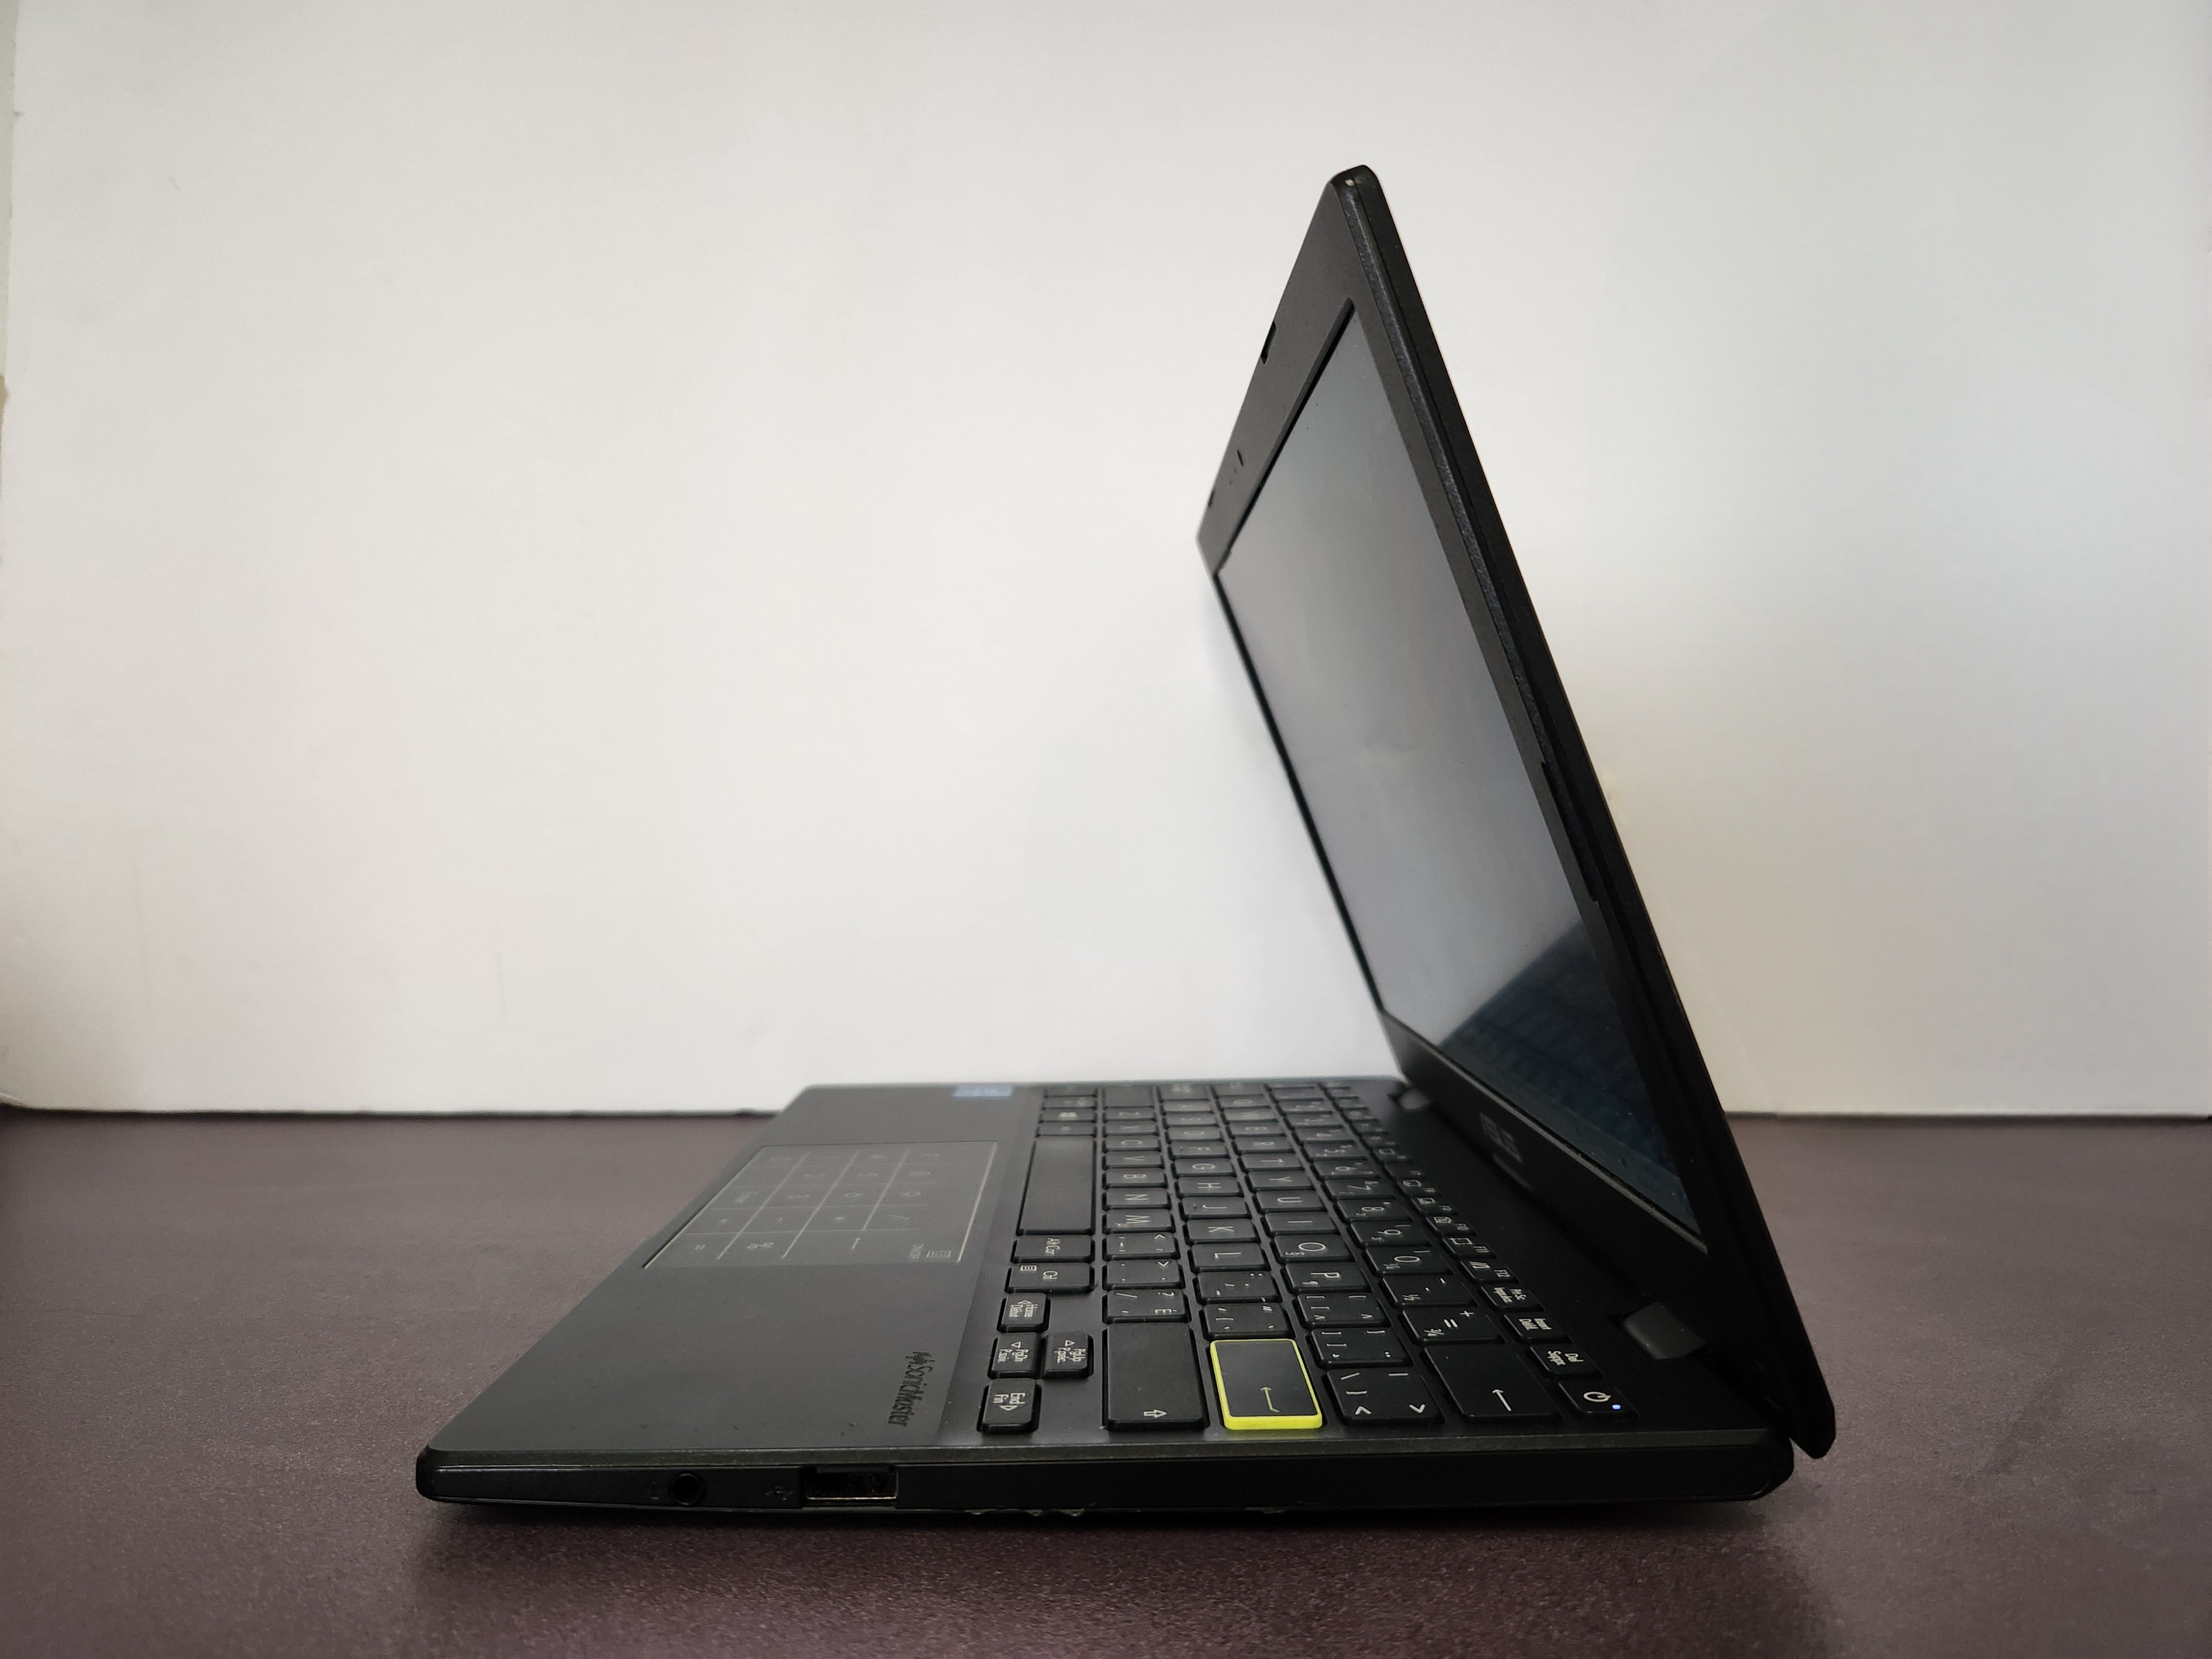 Asus L210MA - Refurbished Laptop